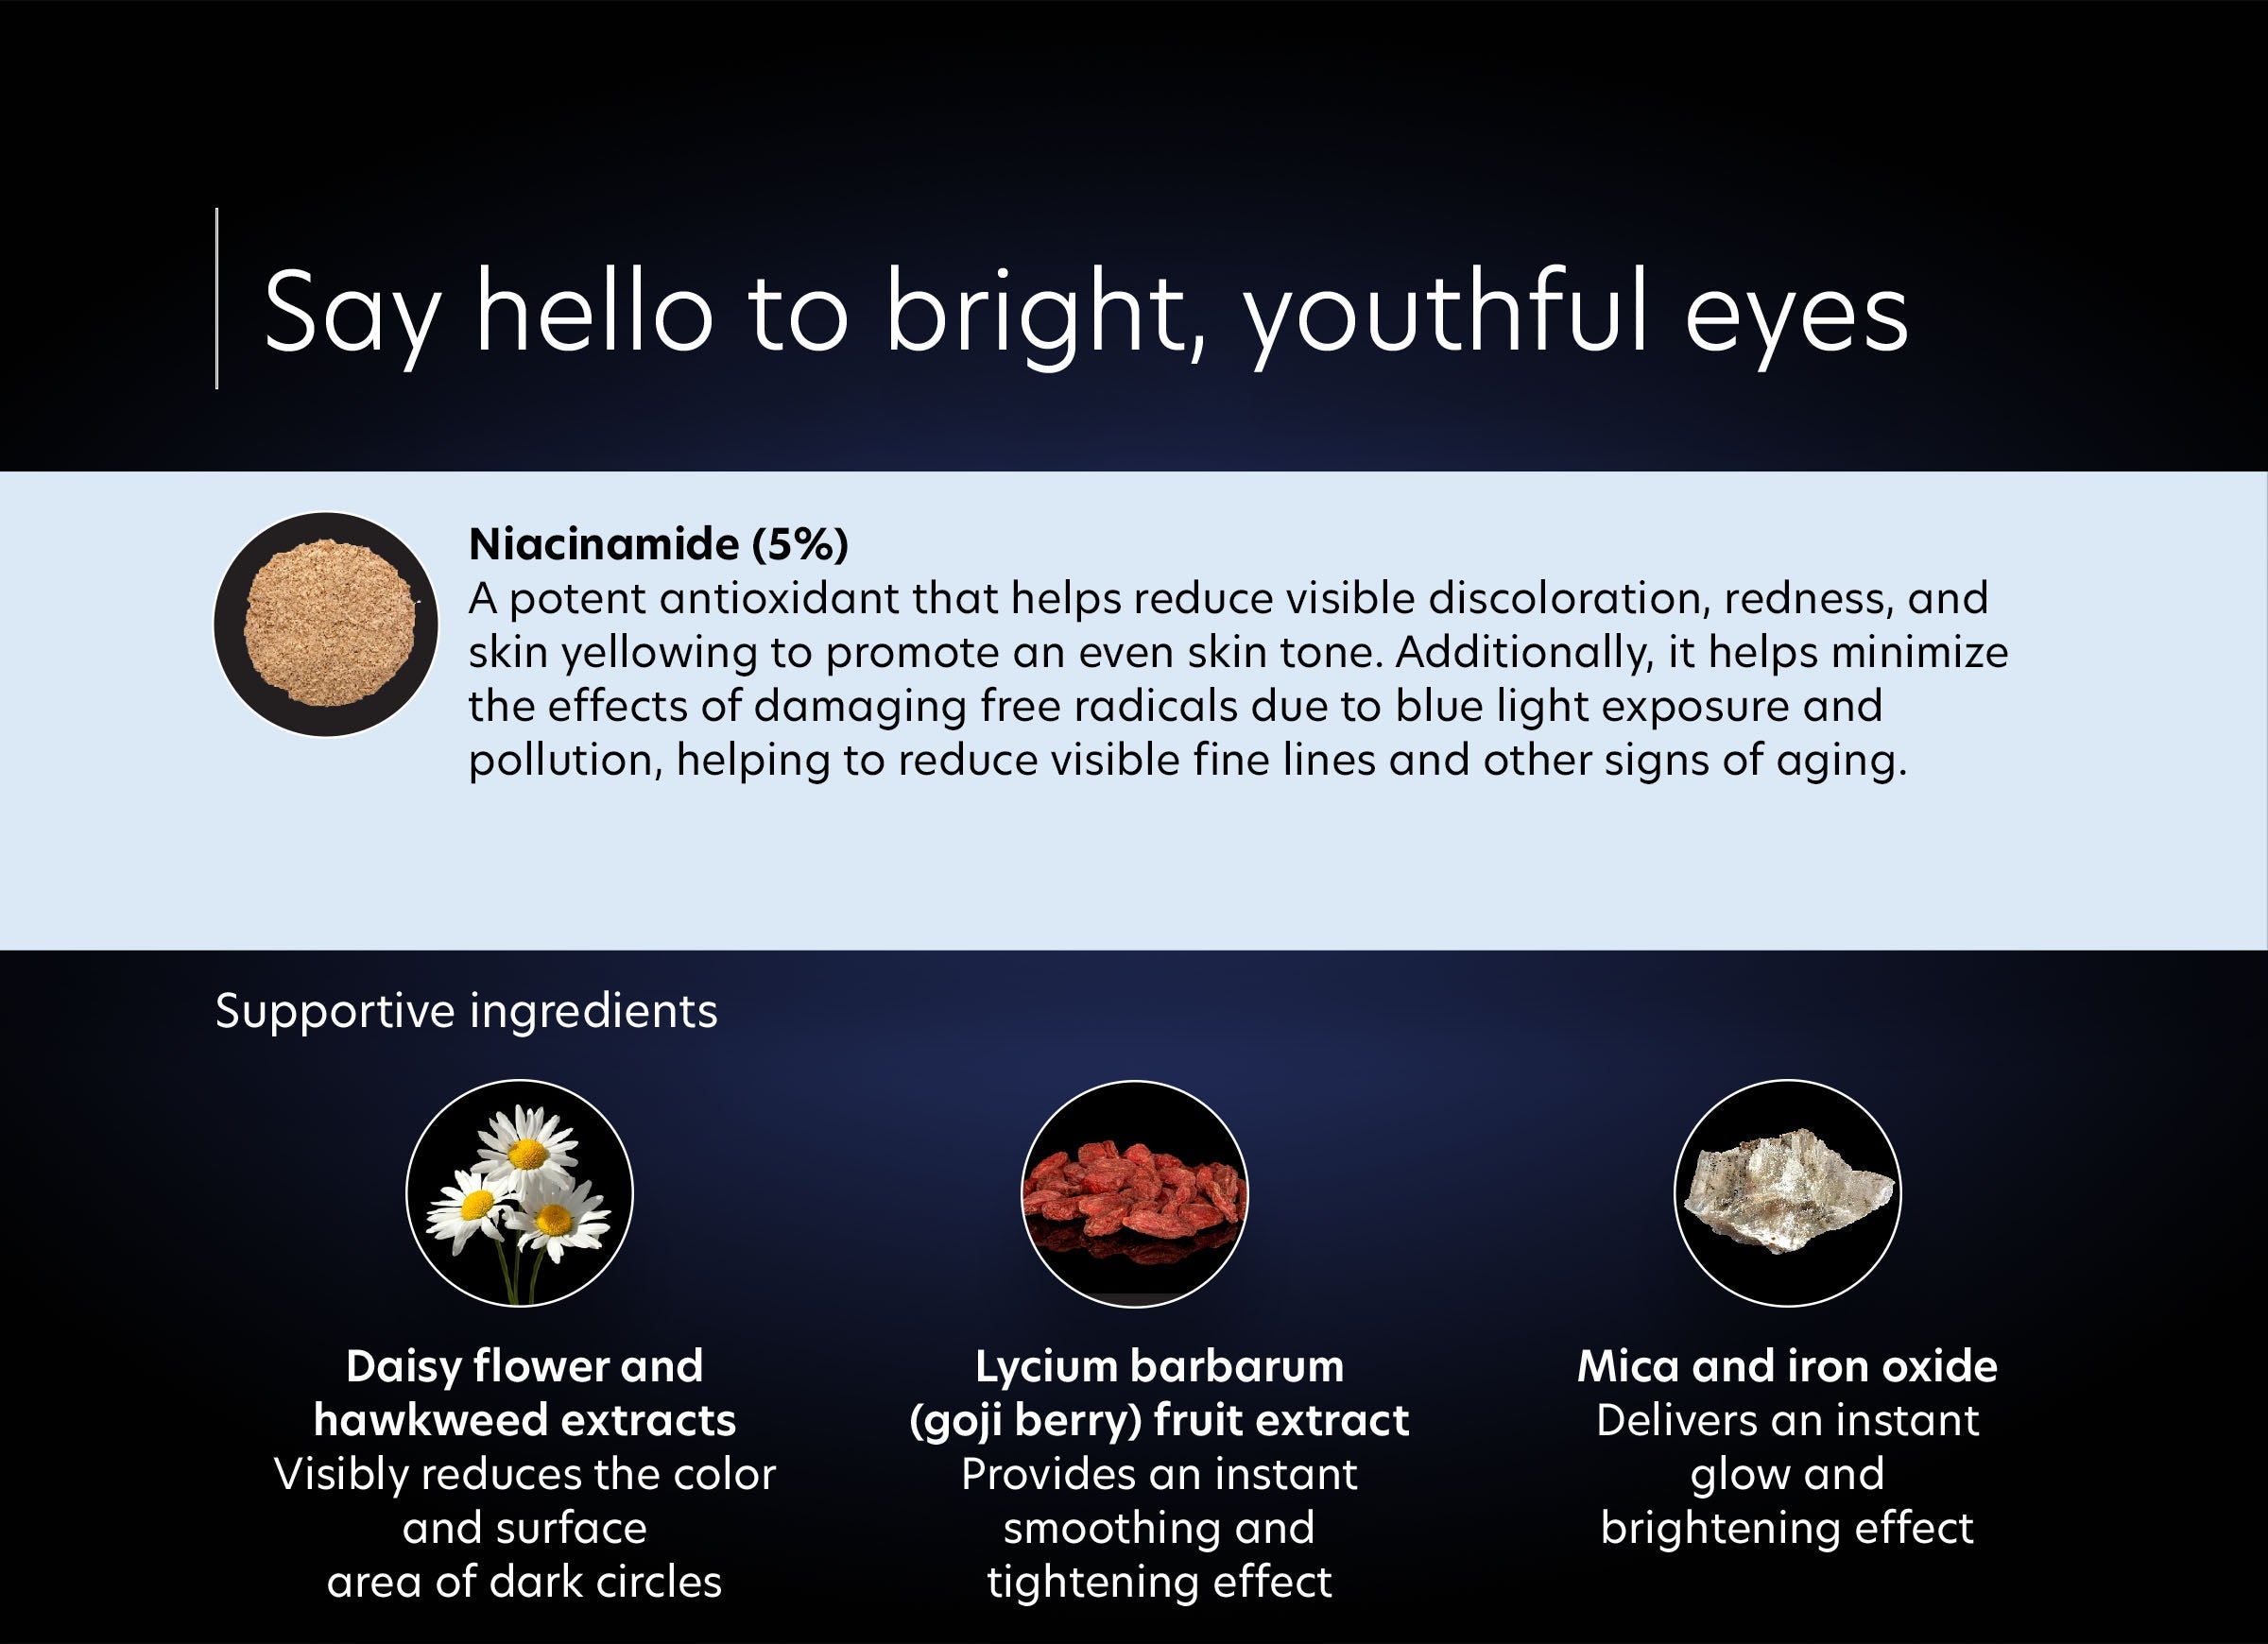 Vitamin b3 Eye Brightening Cream - Say hello to bright, youthful eyes